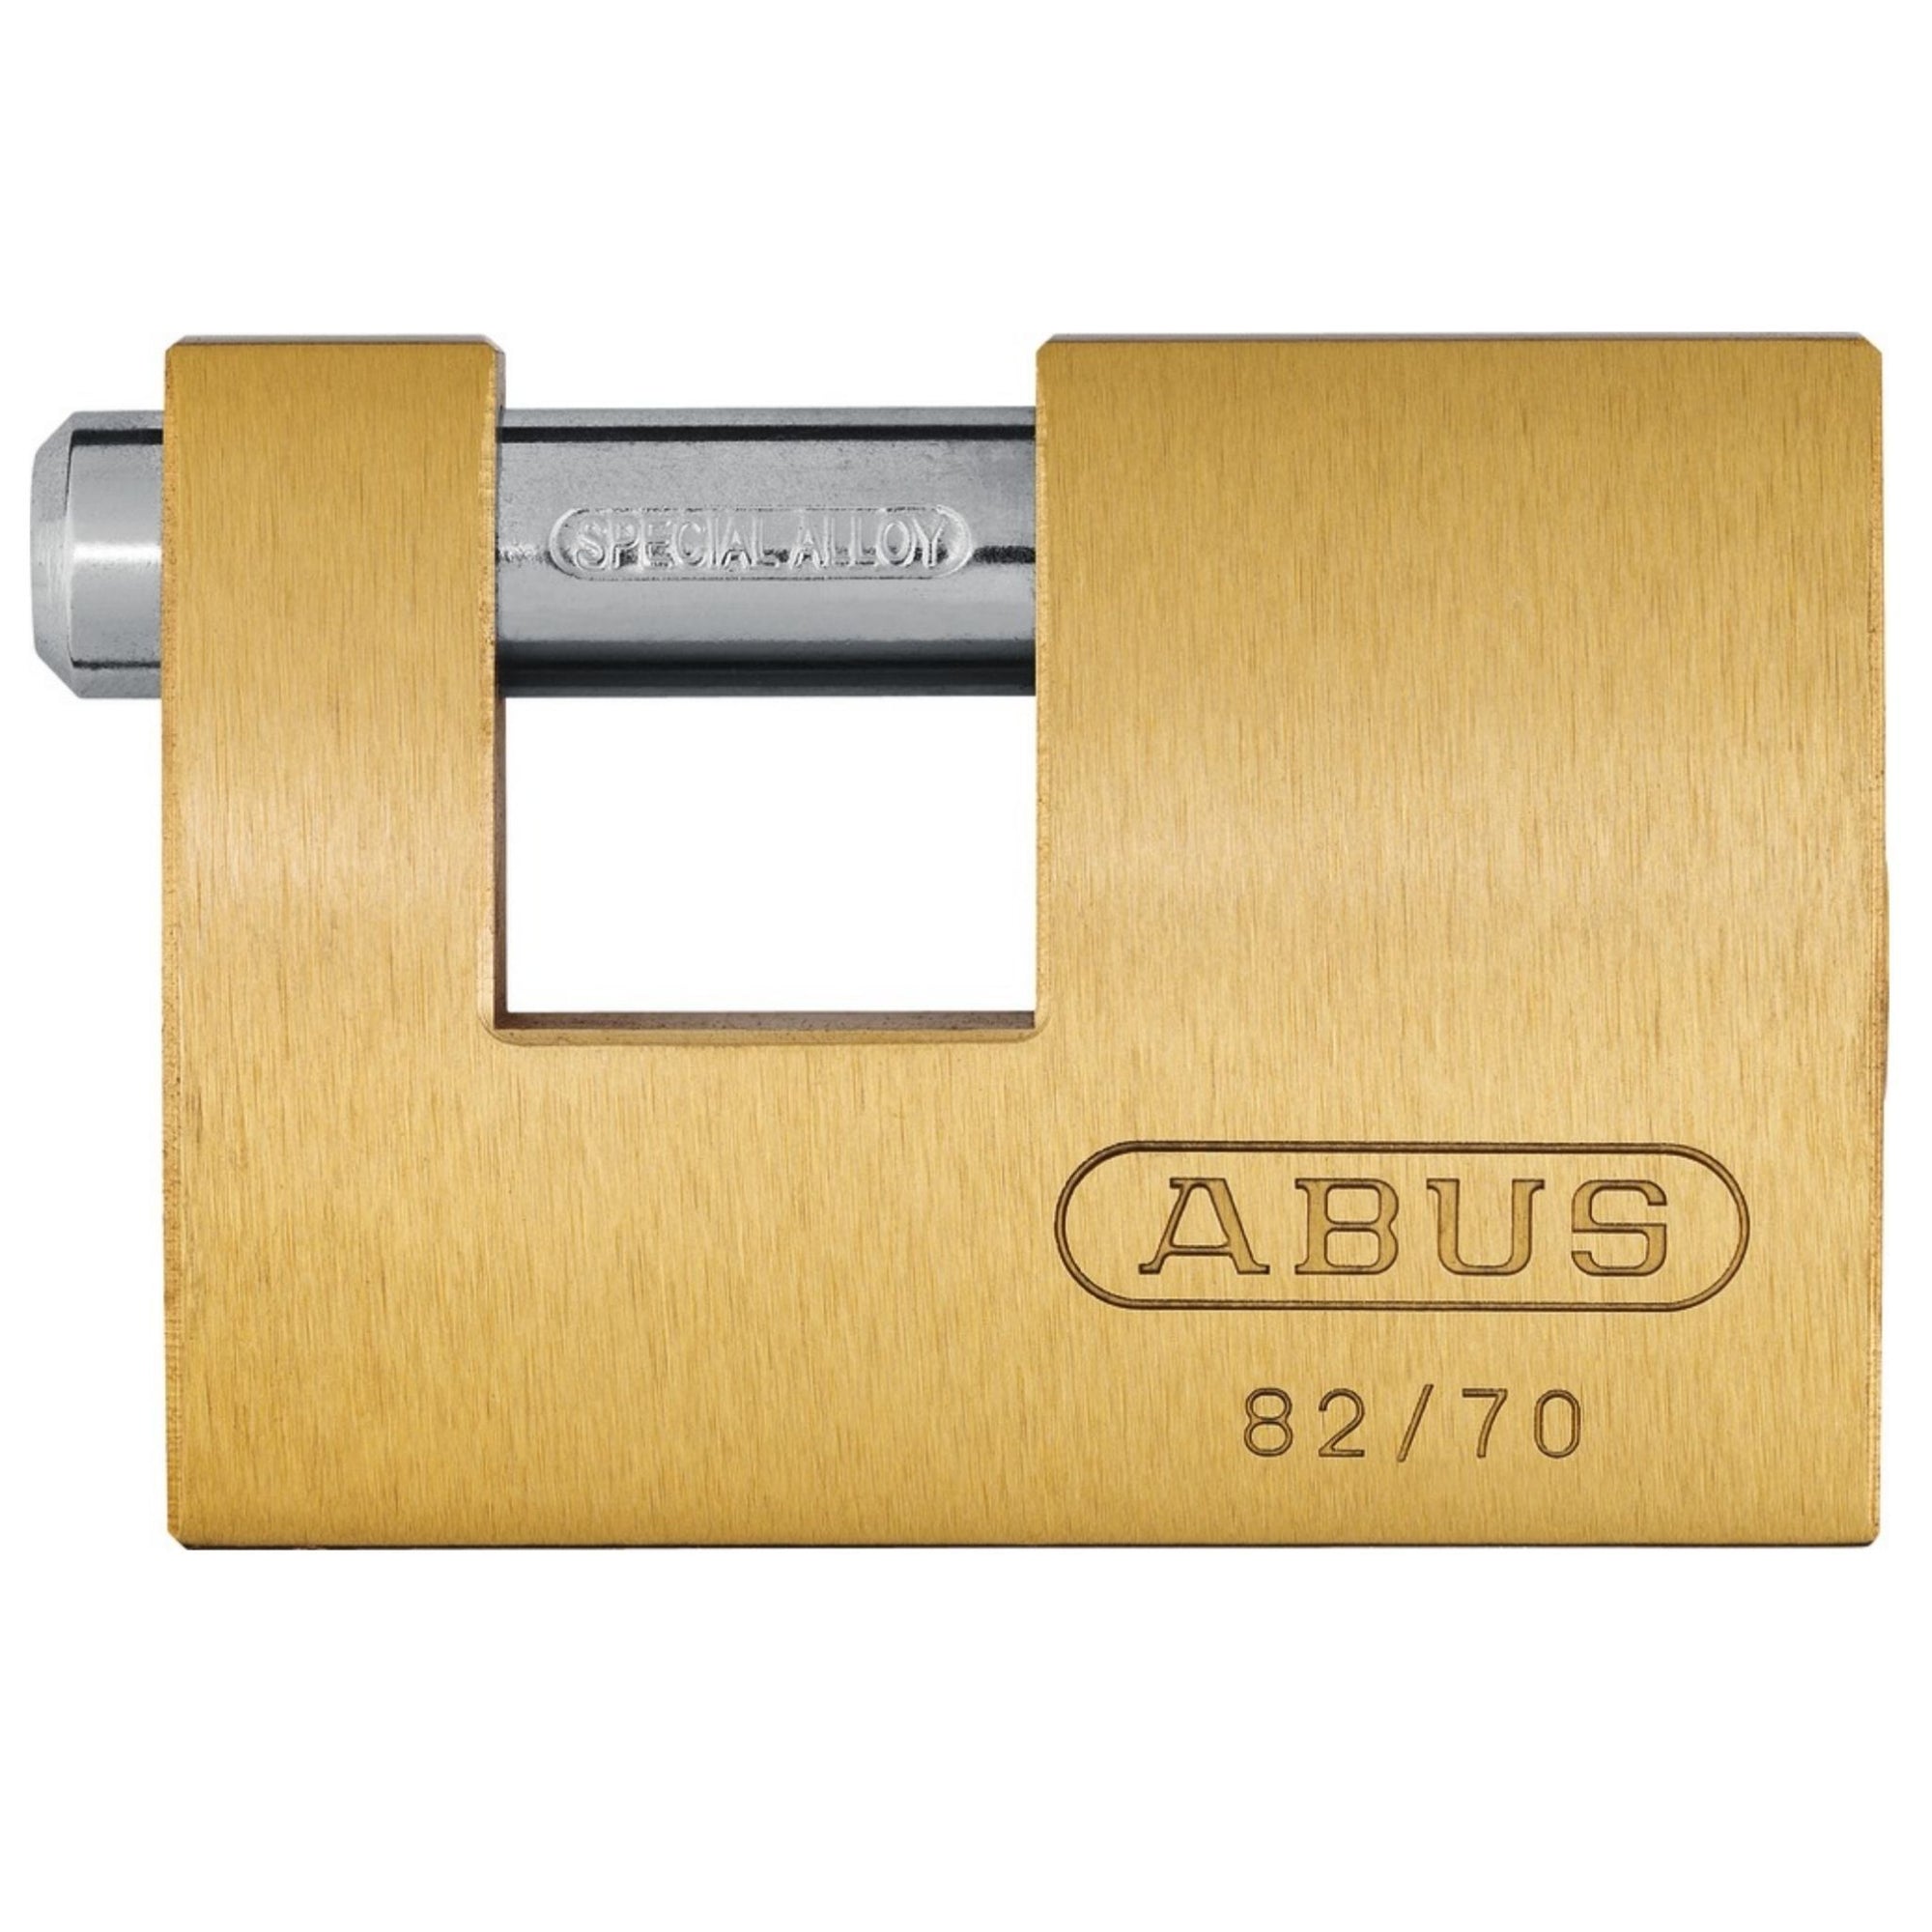 Abus 82/70 KA 8513 Monoblock Lock Keyed Alike Brass Mono Padlocks Match Existing Key# KA8513 - The Lock Source